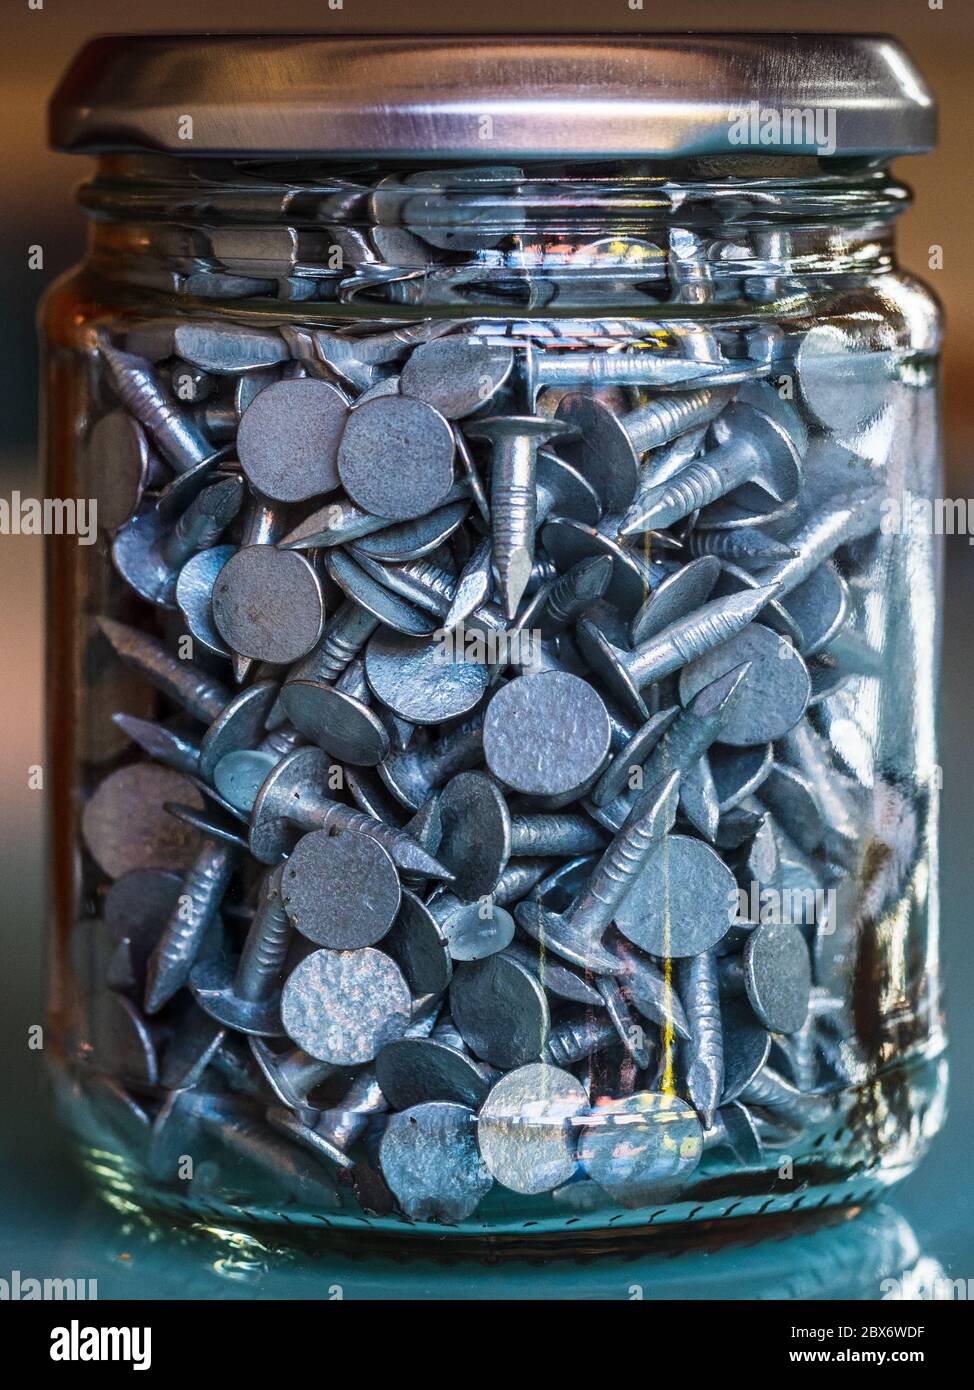 Chiodi - Nail jar - Jar of Clout Nails or Roofing Felt Nails Foto Stock